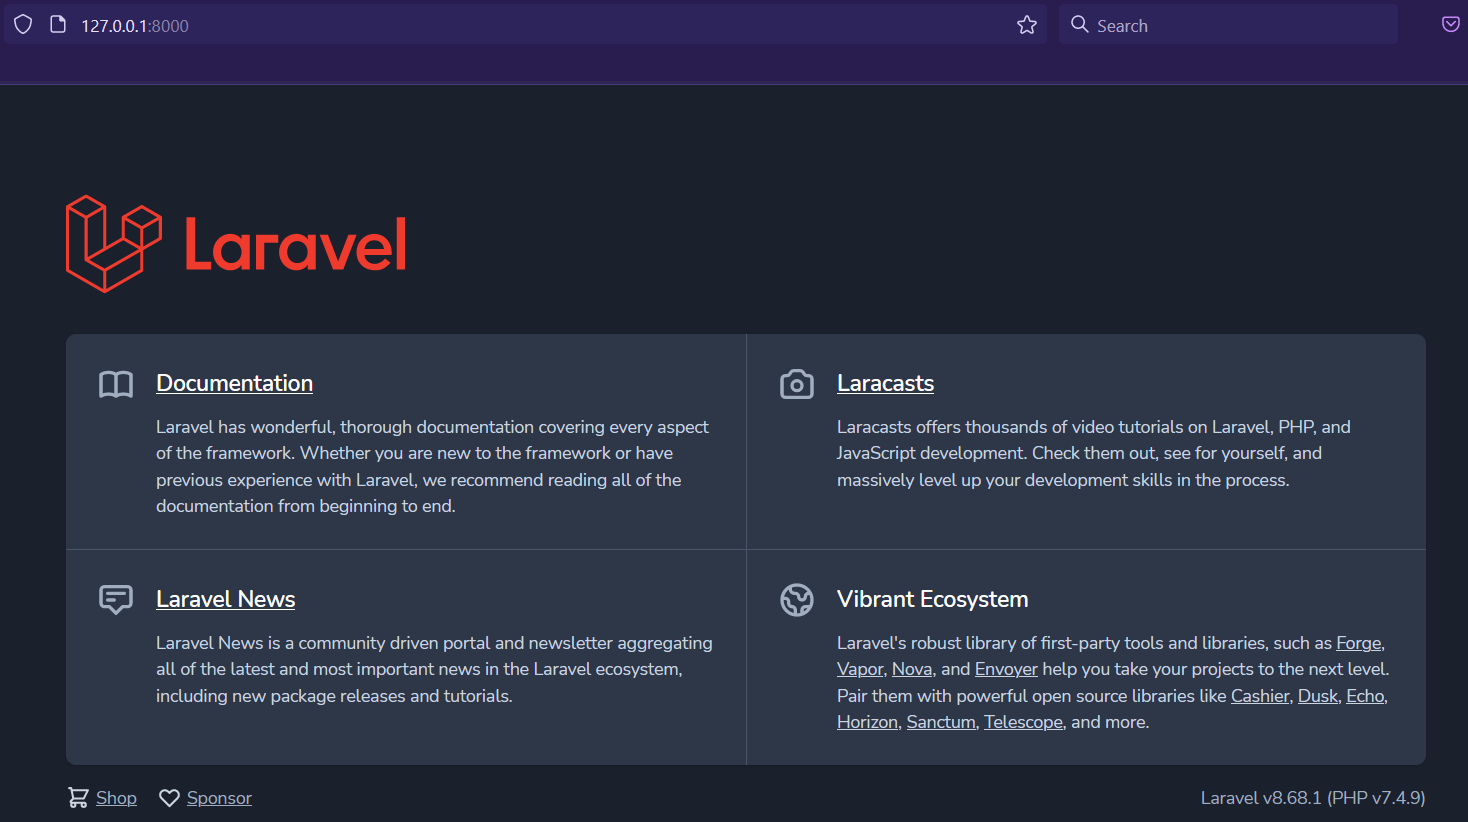 MVC CRUD Operations Using Laravel 8 - Home Page